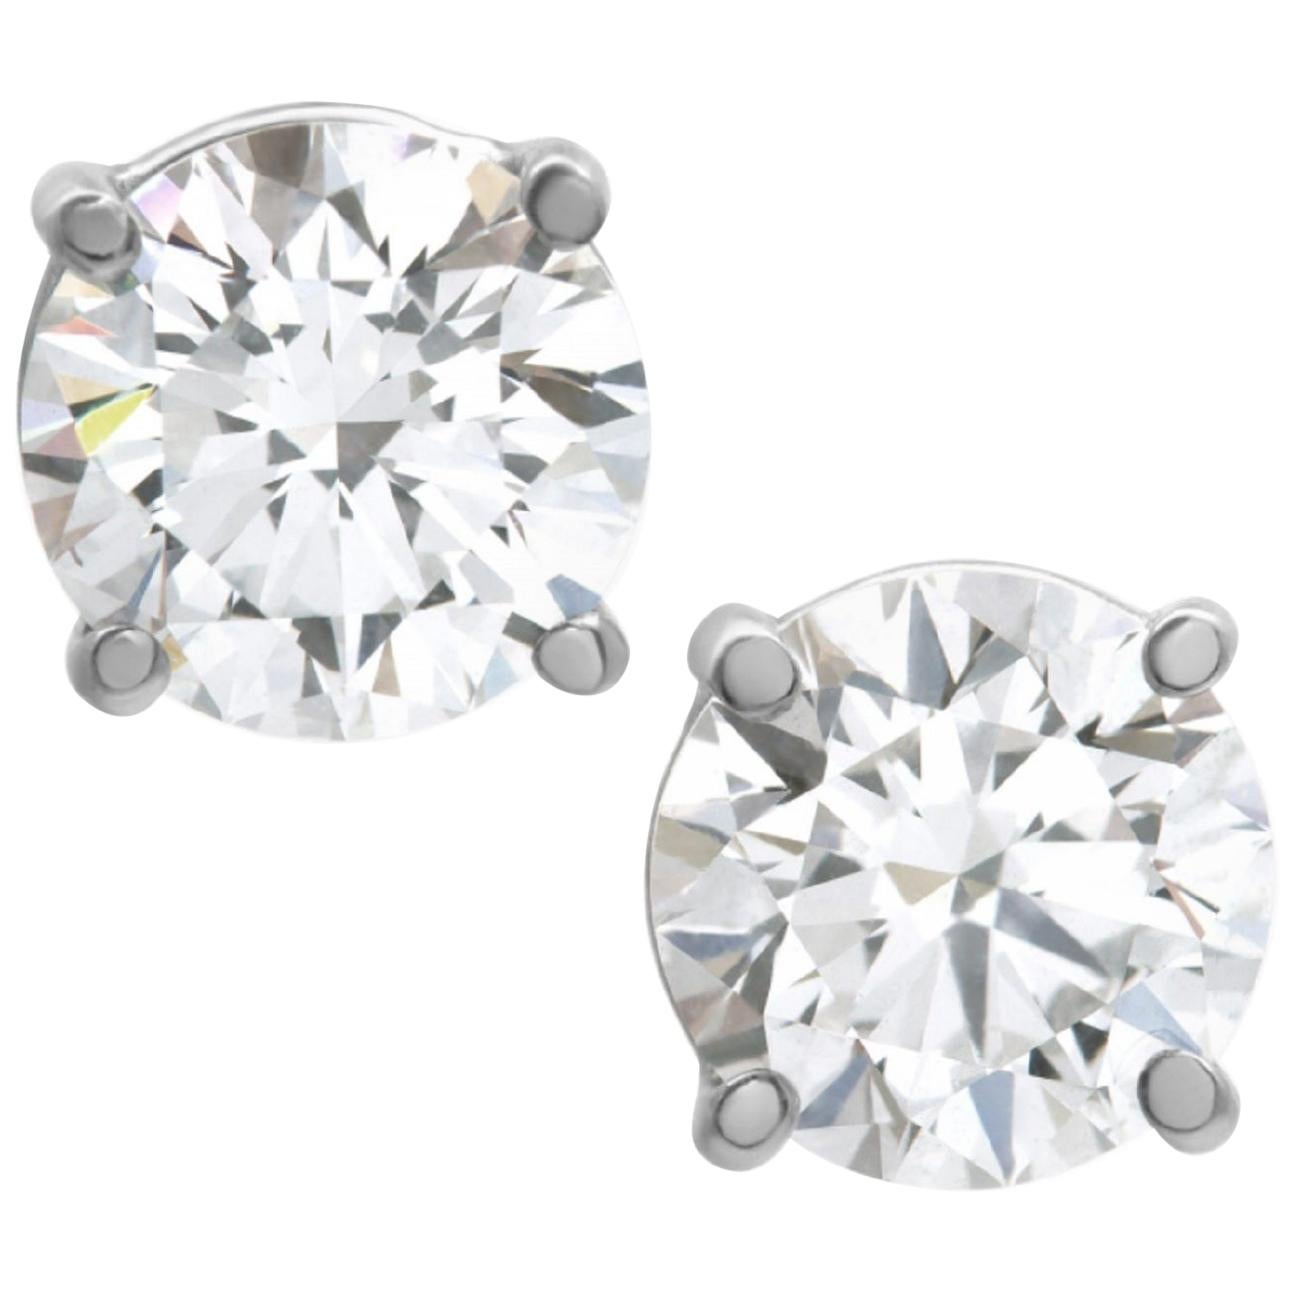 Internally Flawless D Color GIA Certified 4.01 Carat Diamond Studs